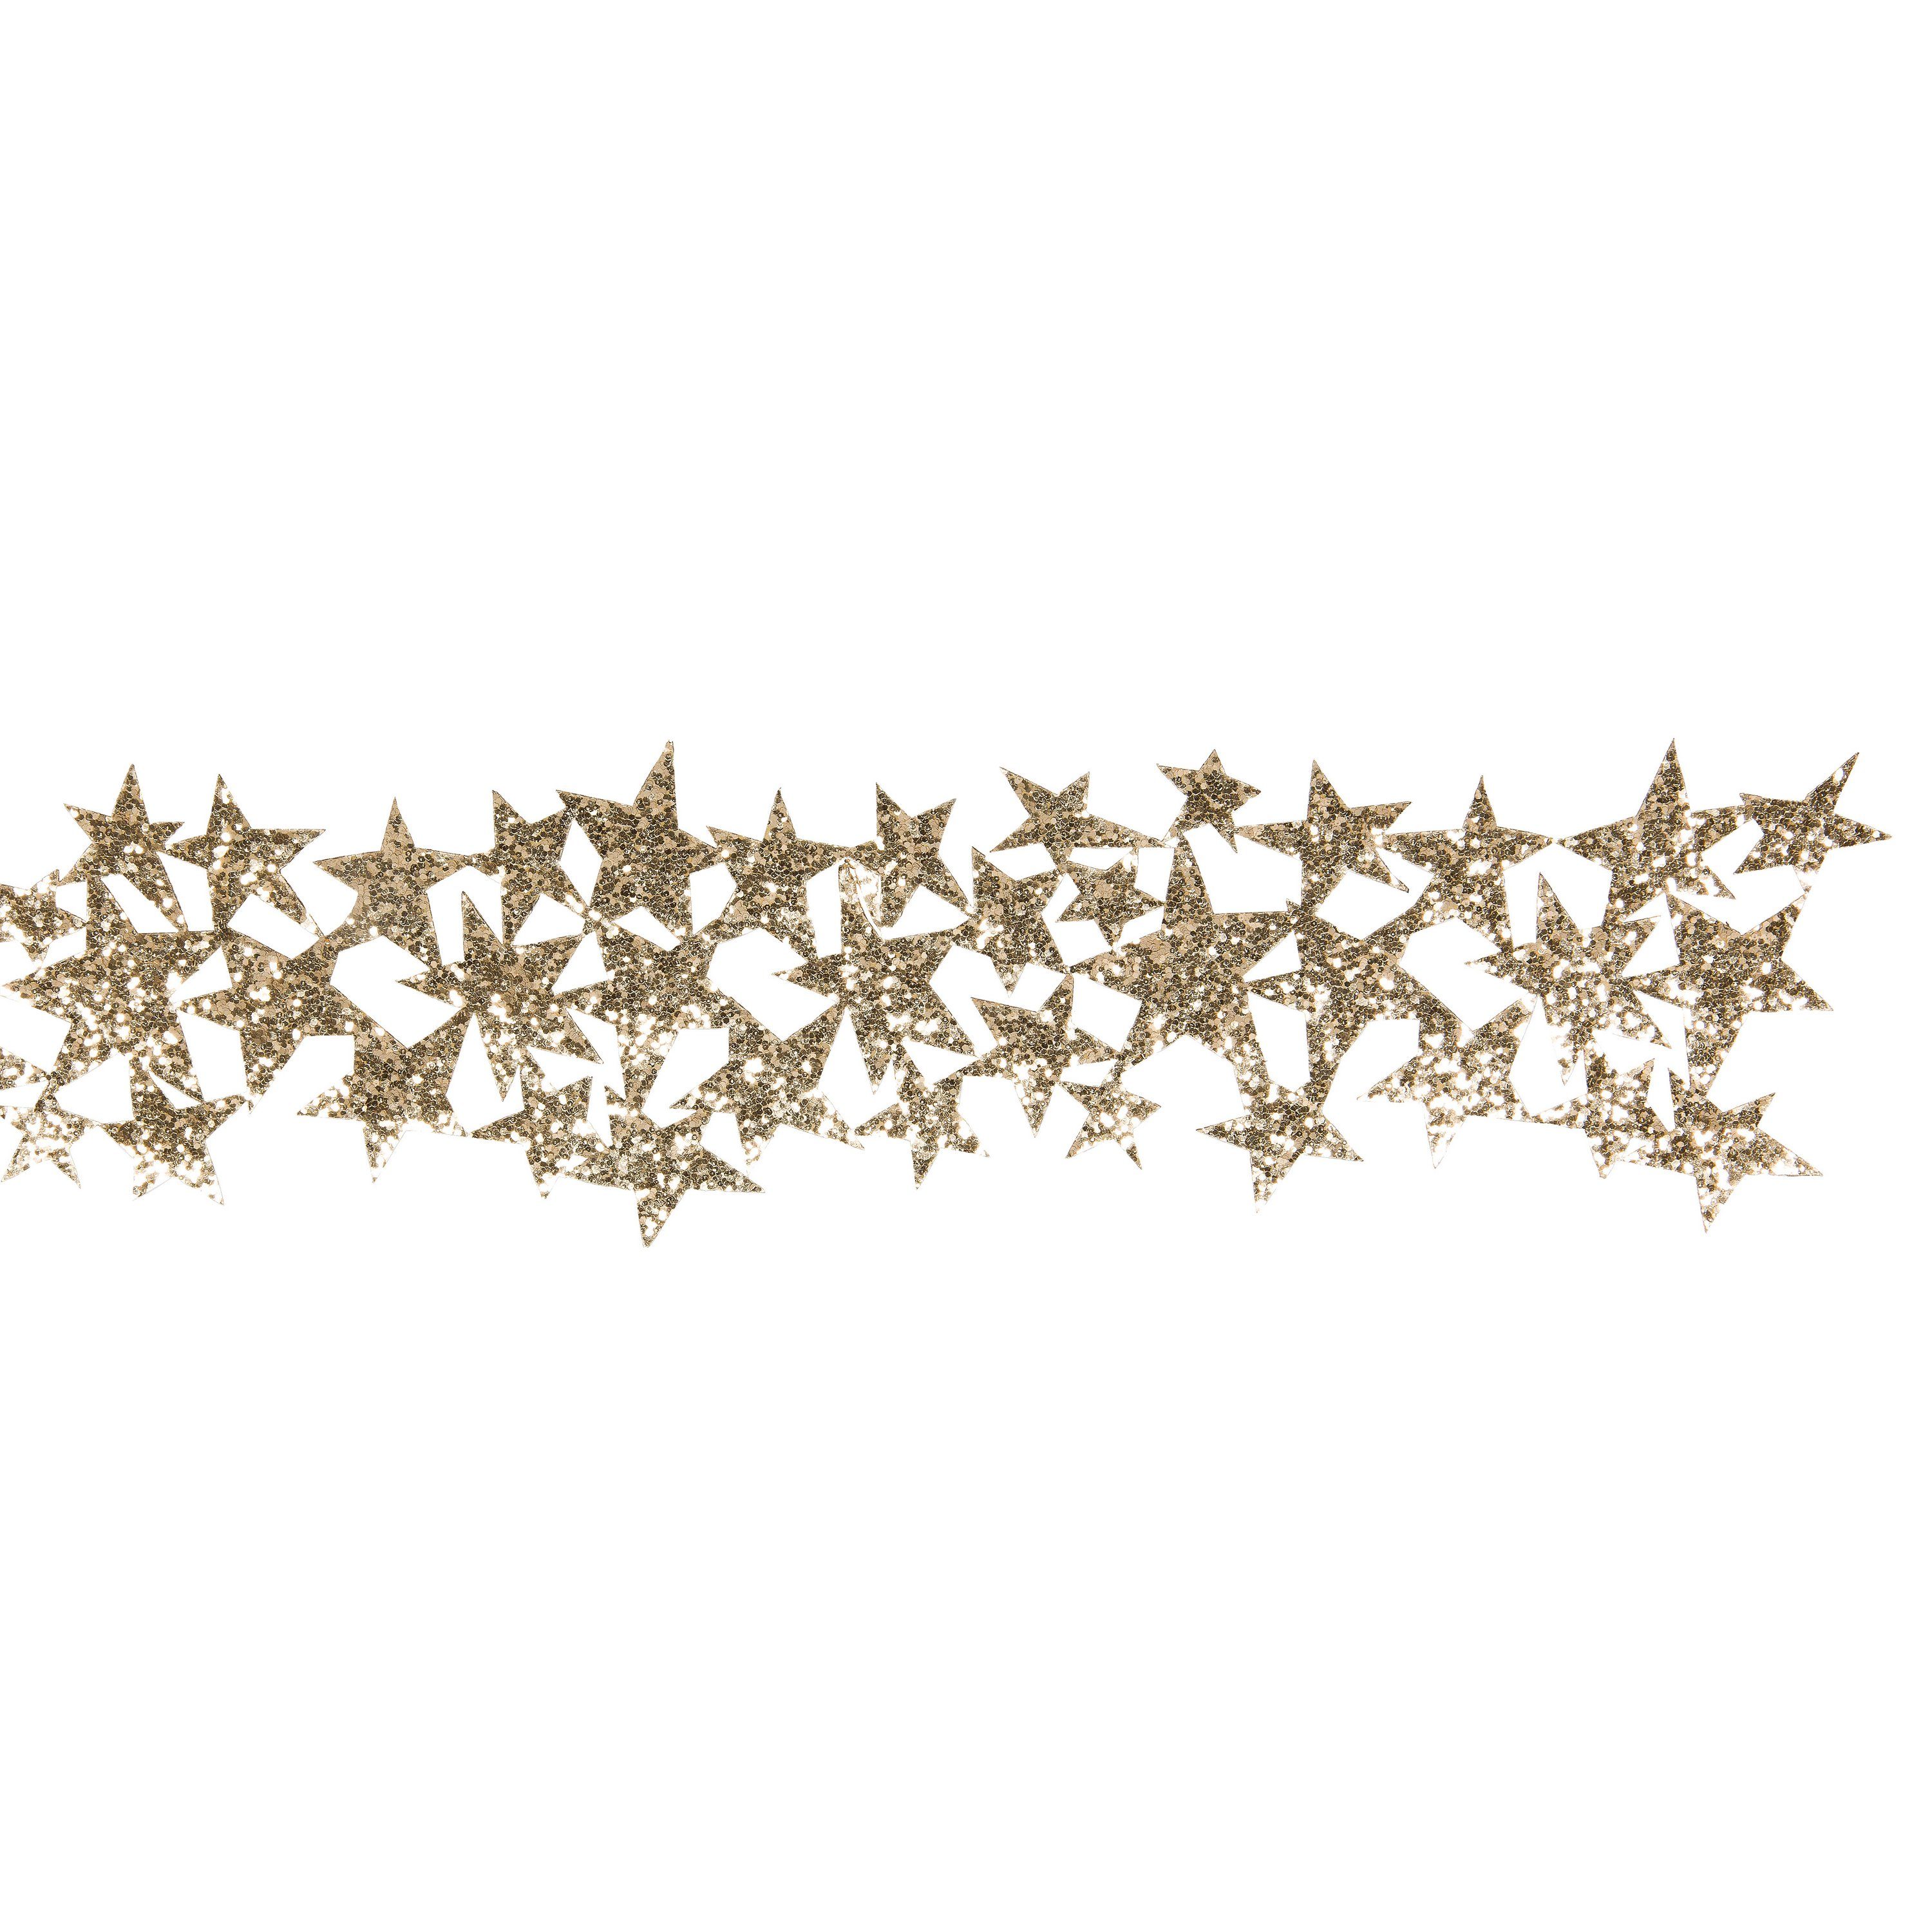 HALBACH Packpapier Glitterband Sterne 90 mm, 1 m lang Gold